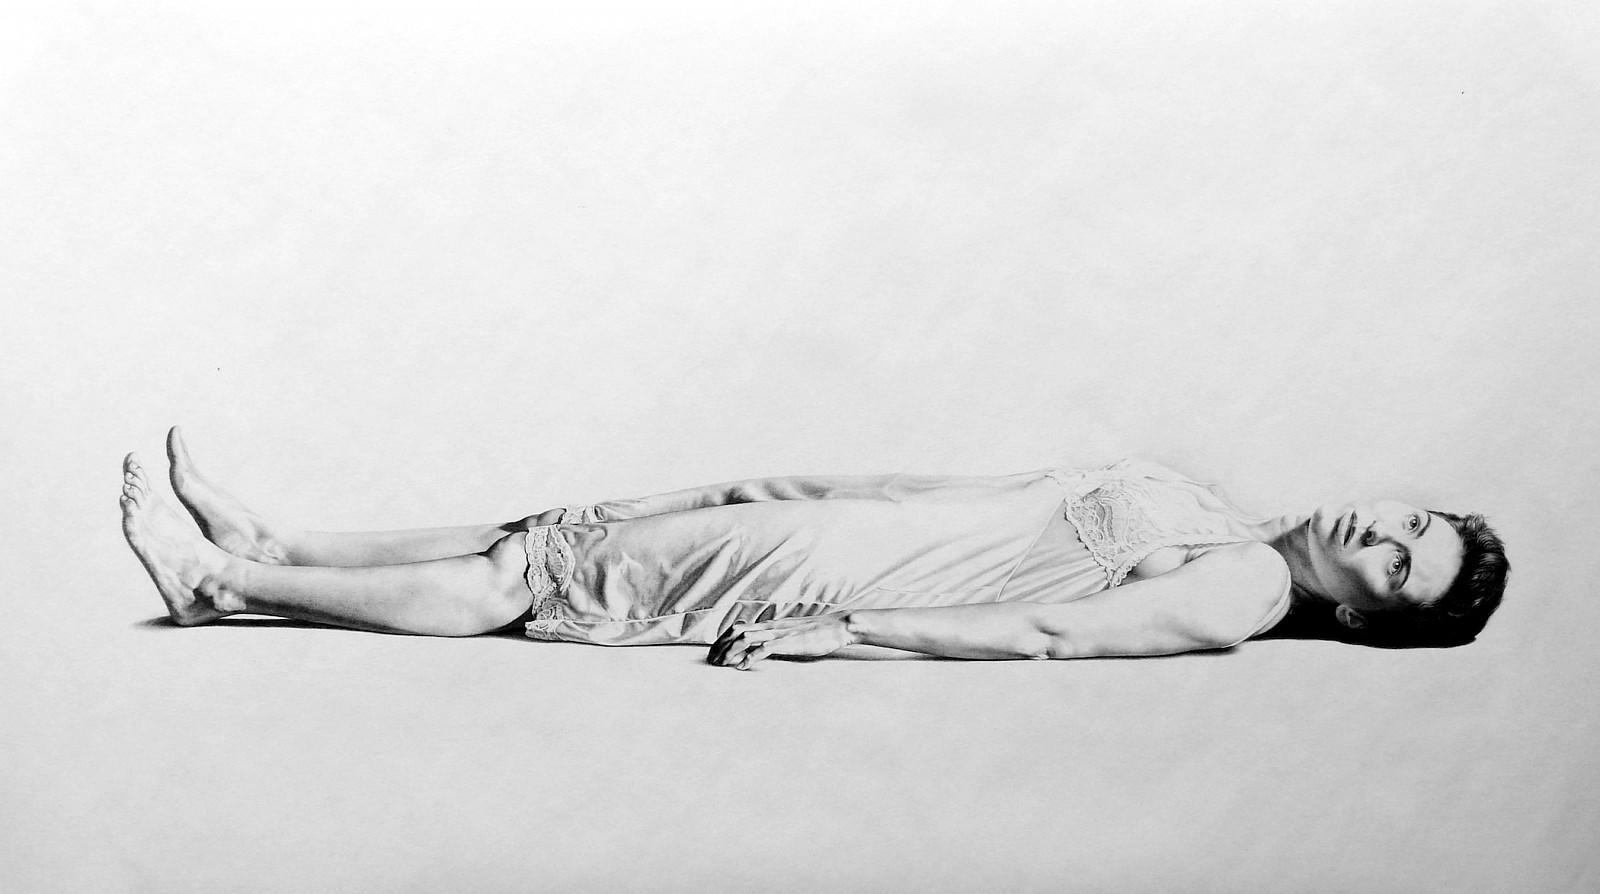 Román Miranda
Sabines Fragmentation, 2009
pencil on paper, 42 x 79 in.